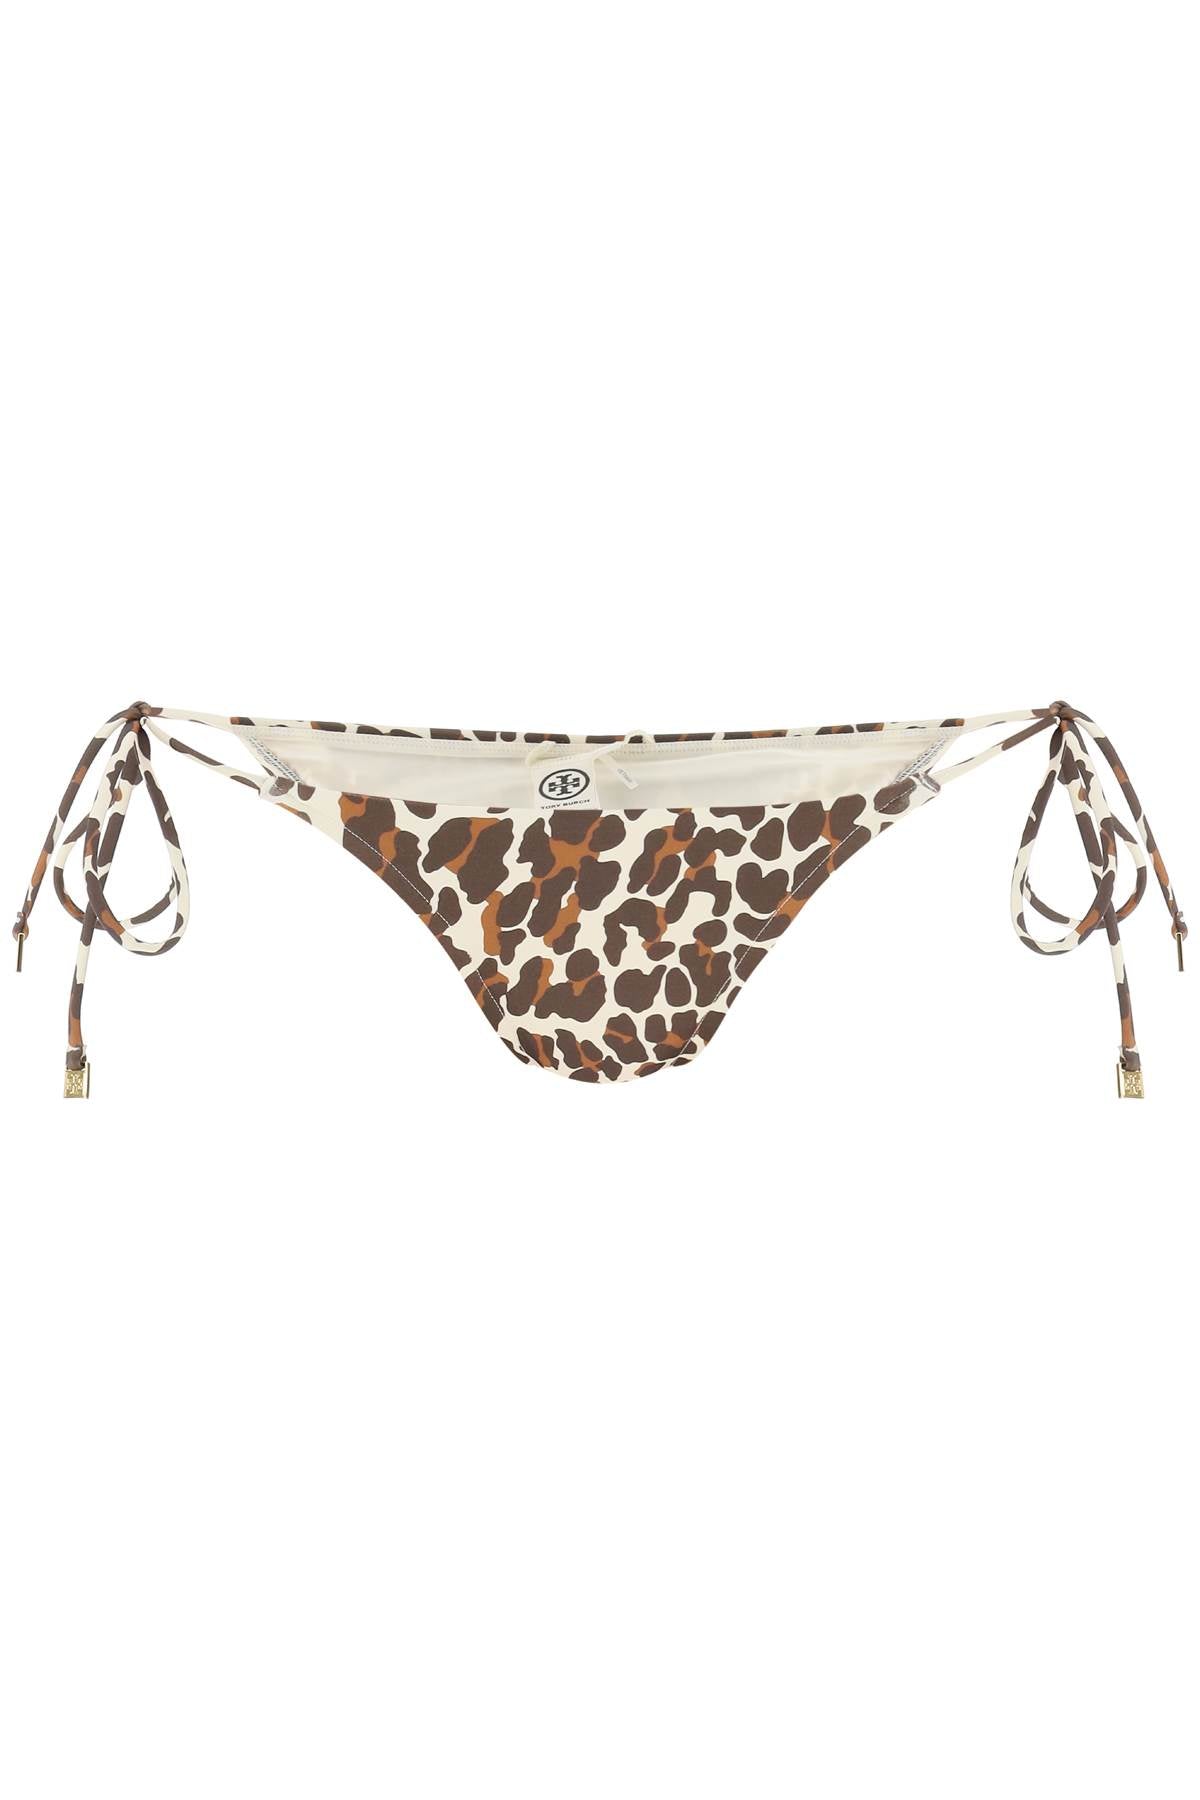 Tory burch leopard print bikini bottom-0